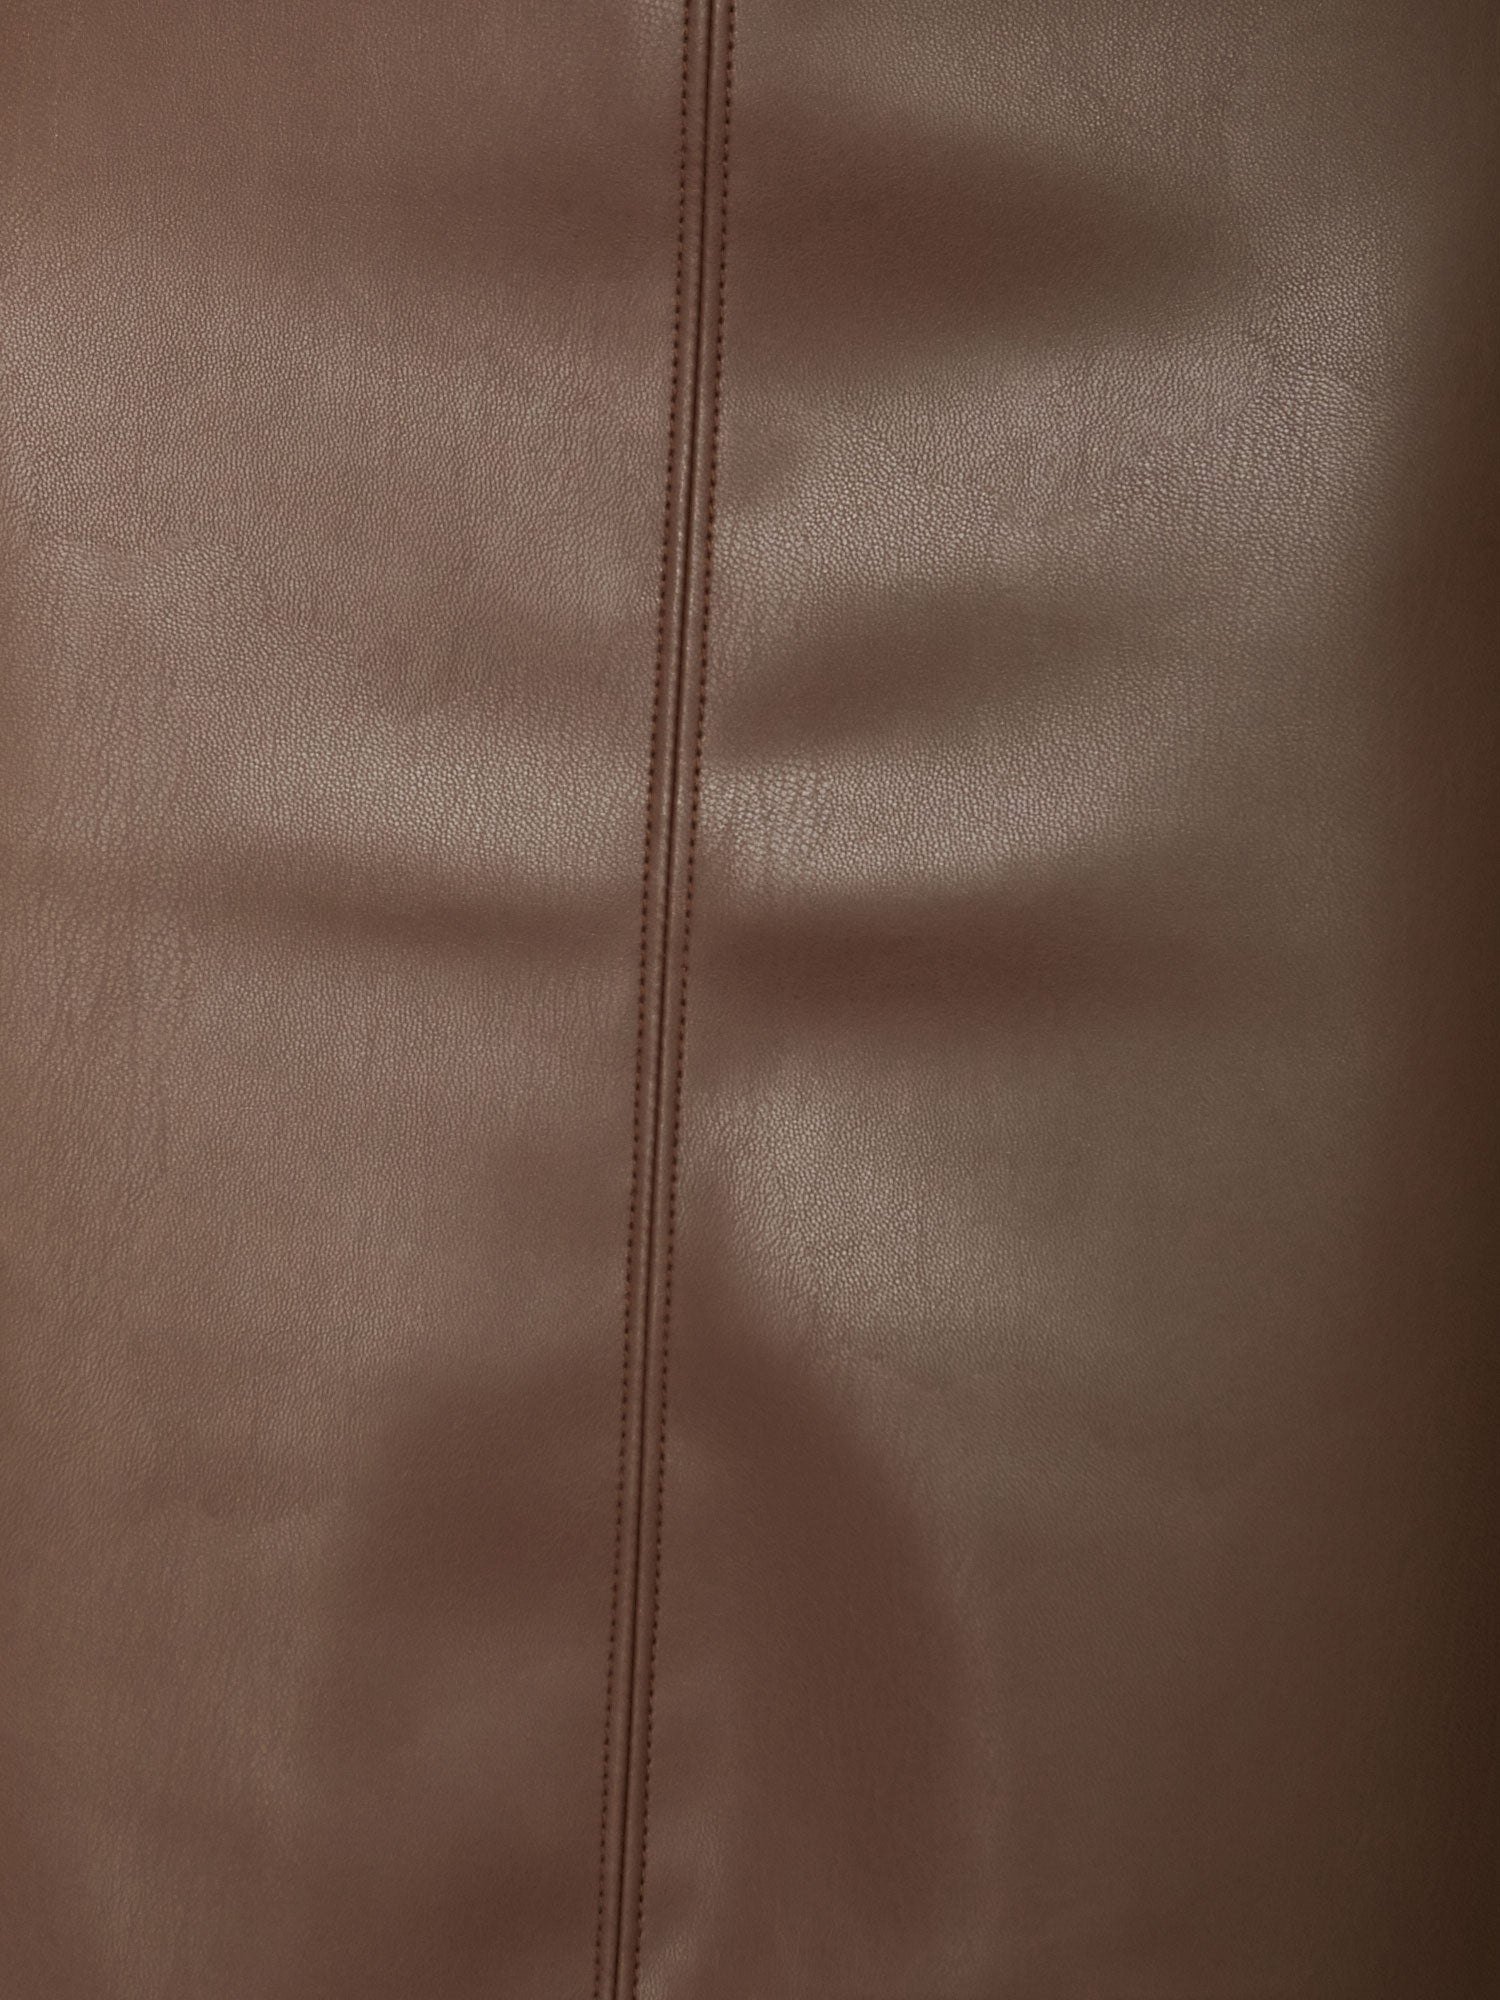 Brown Leather Midi Pencil Skirt Selected by KA.TL.AK